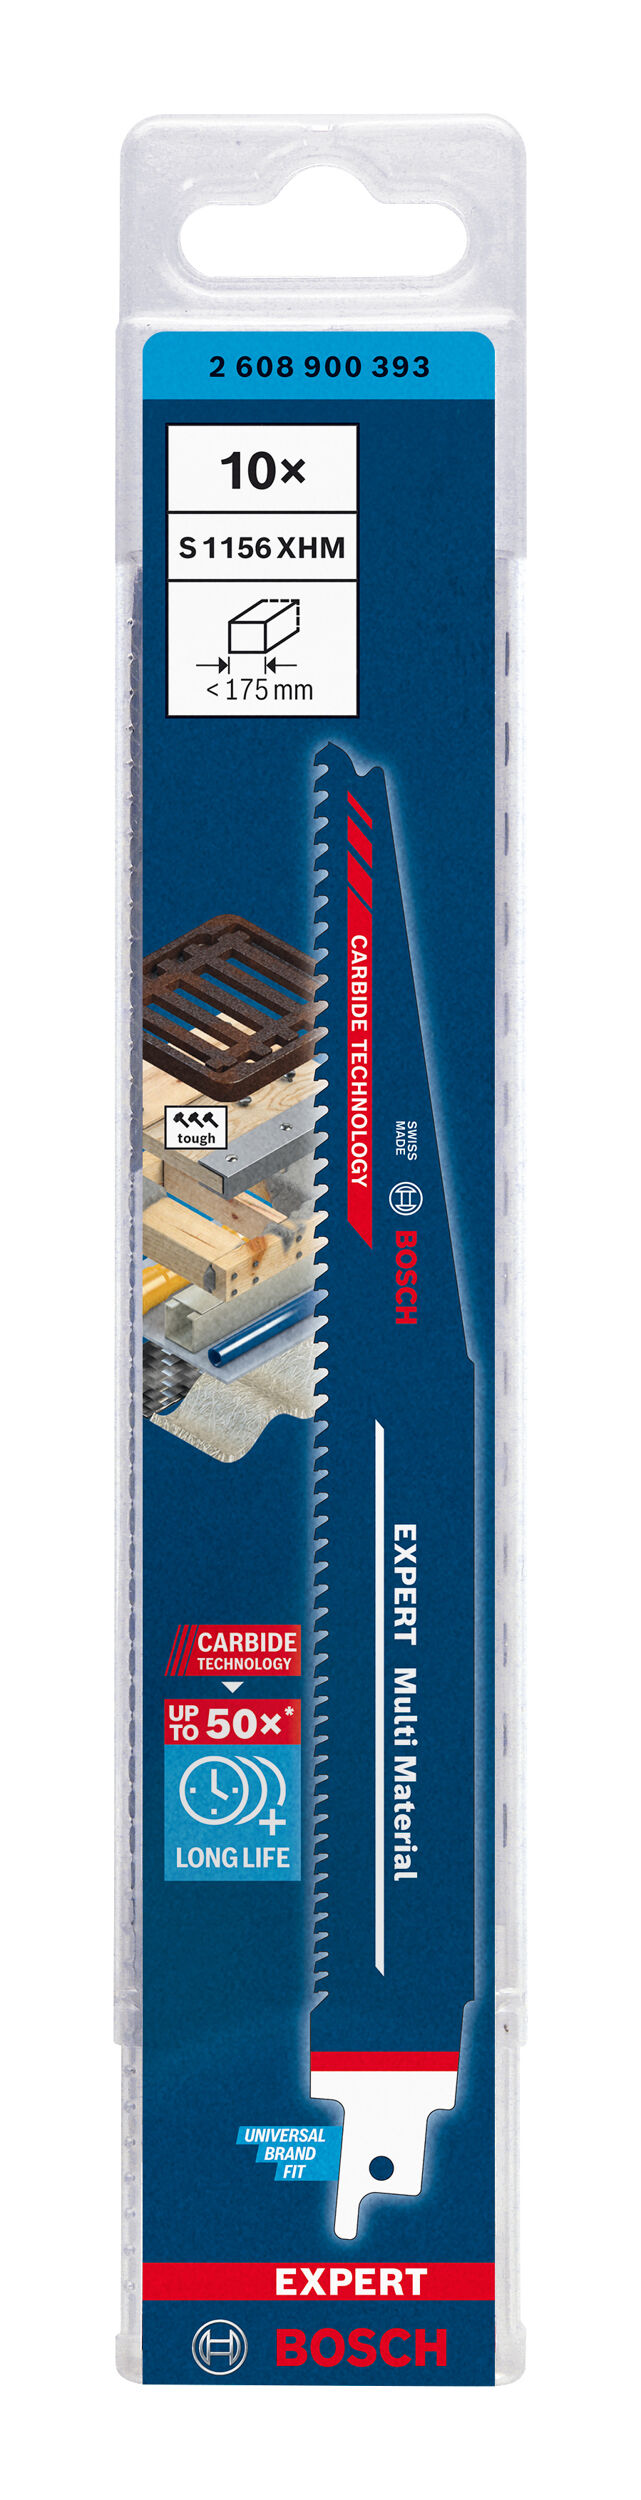 and 10er-Pack 2608900393 | Wood Säbelsägeblatt XHM Zubehör Metal Bosch S Expert Carbide - 1156 Progressor for